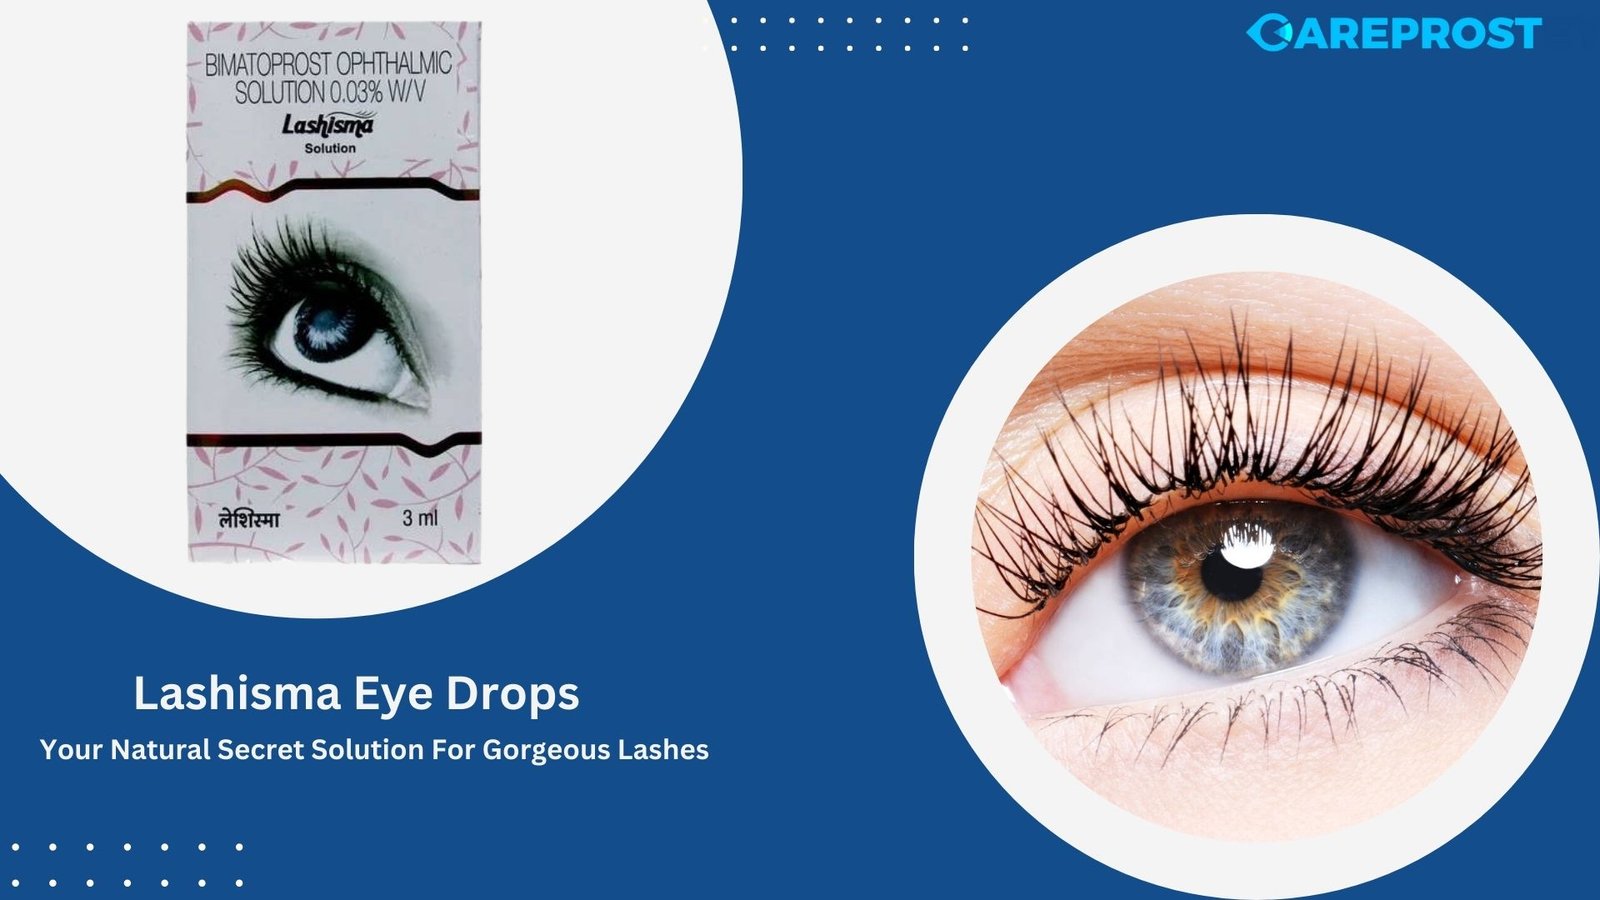 Lashisma Eye Drops: Your Natural Secret Solution For Gorgeous Lashes